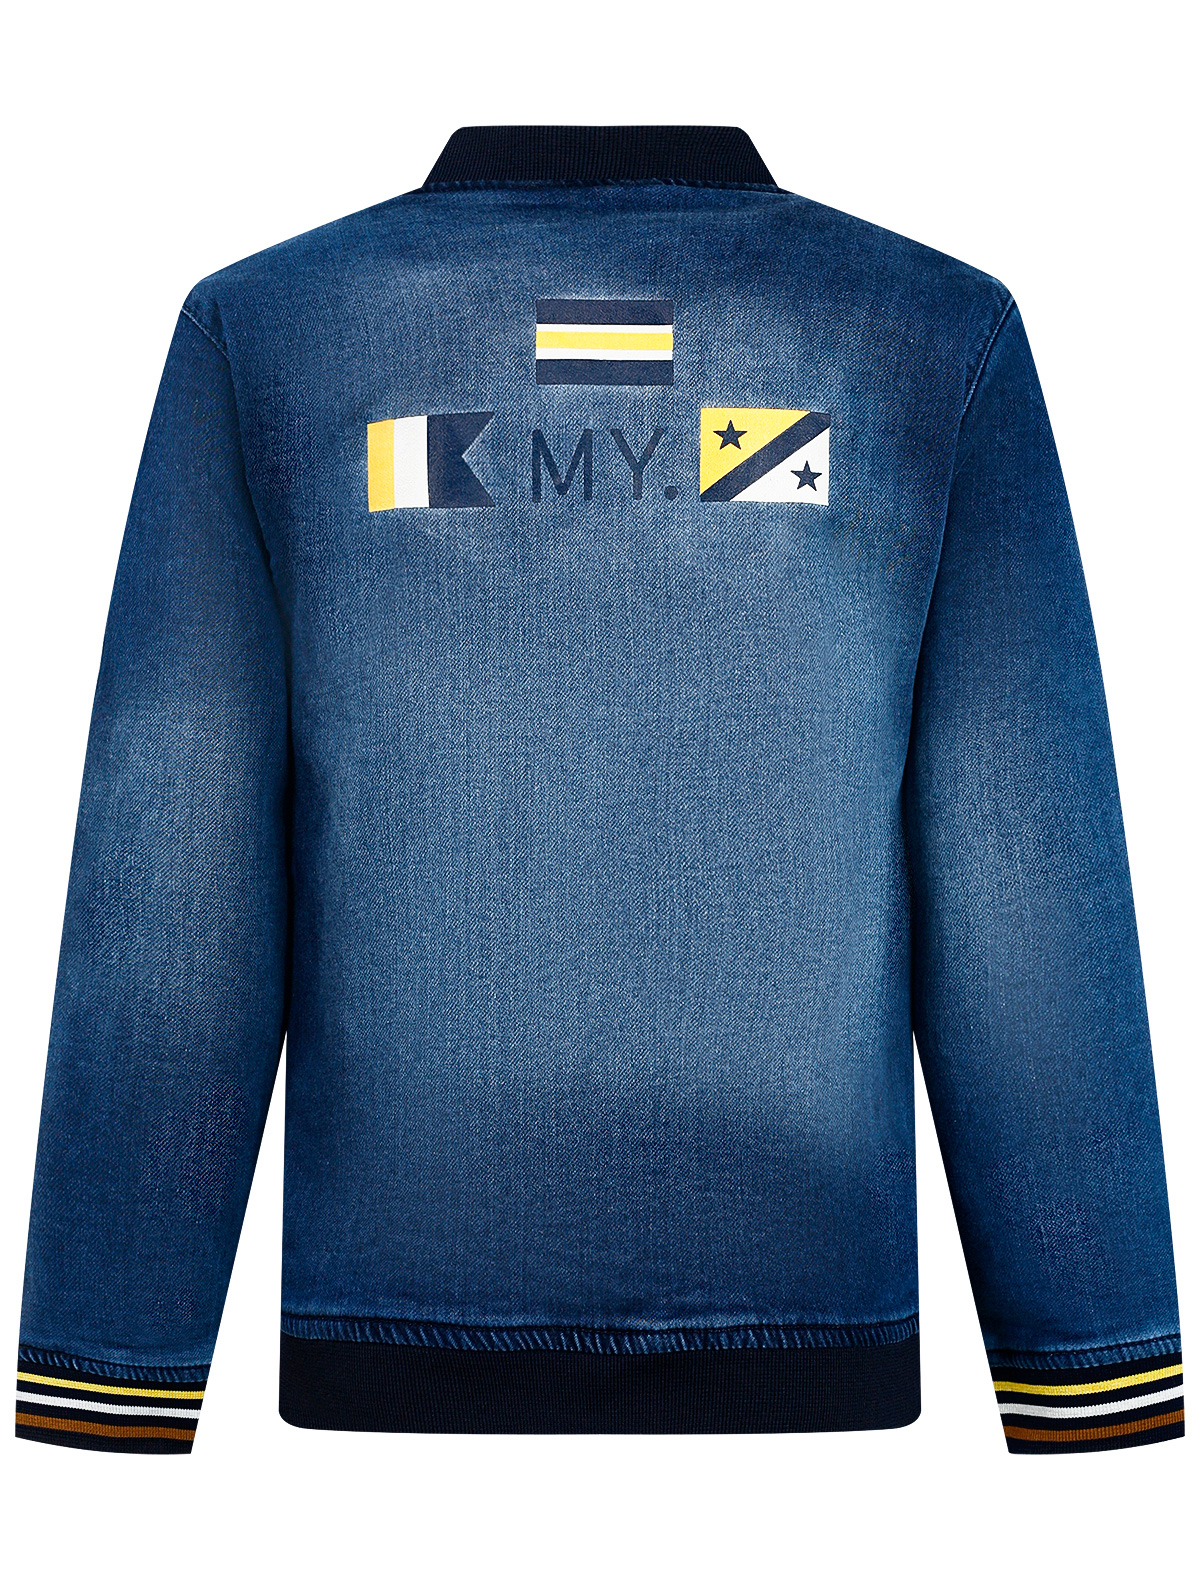 Куртка Mayoral 2299141, цвет синий, размер 6 1074519171550 - фото 2